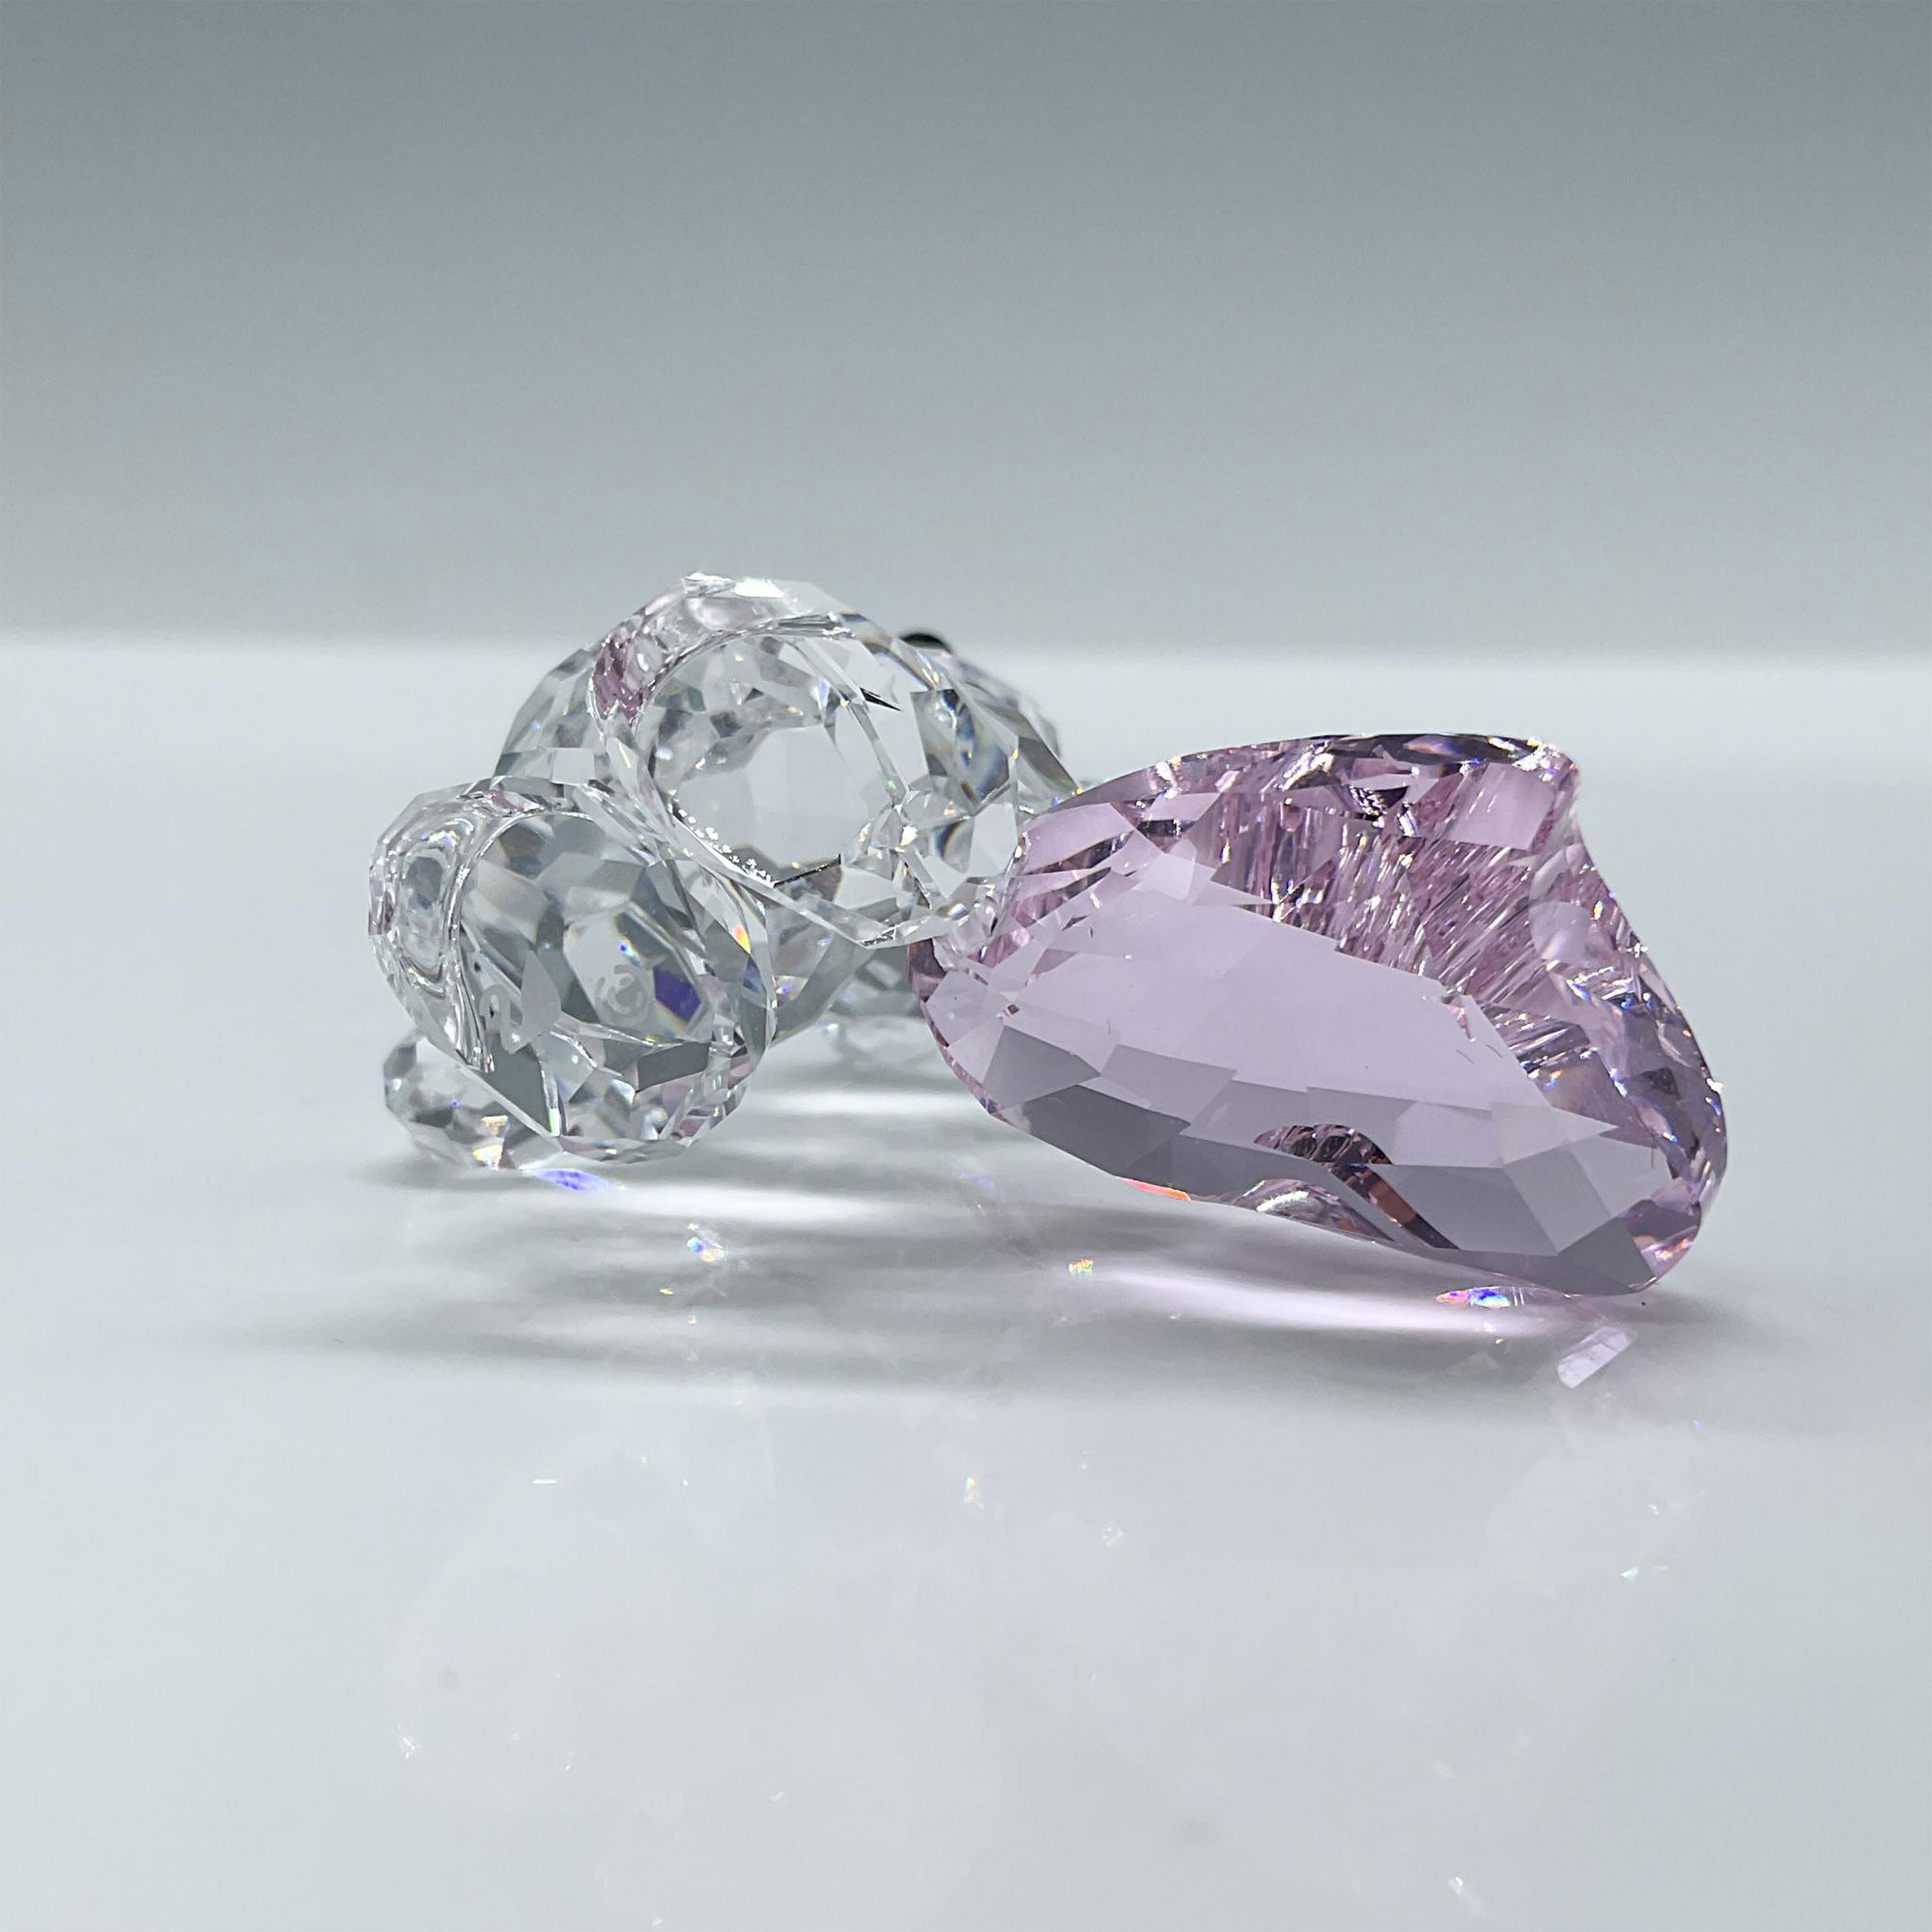 Swarovski Crystal Figurine, Kris Bear With You - Image 3 of 4